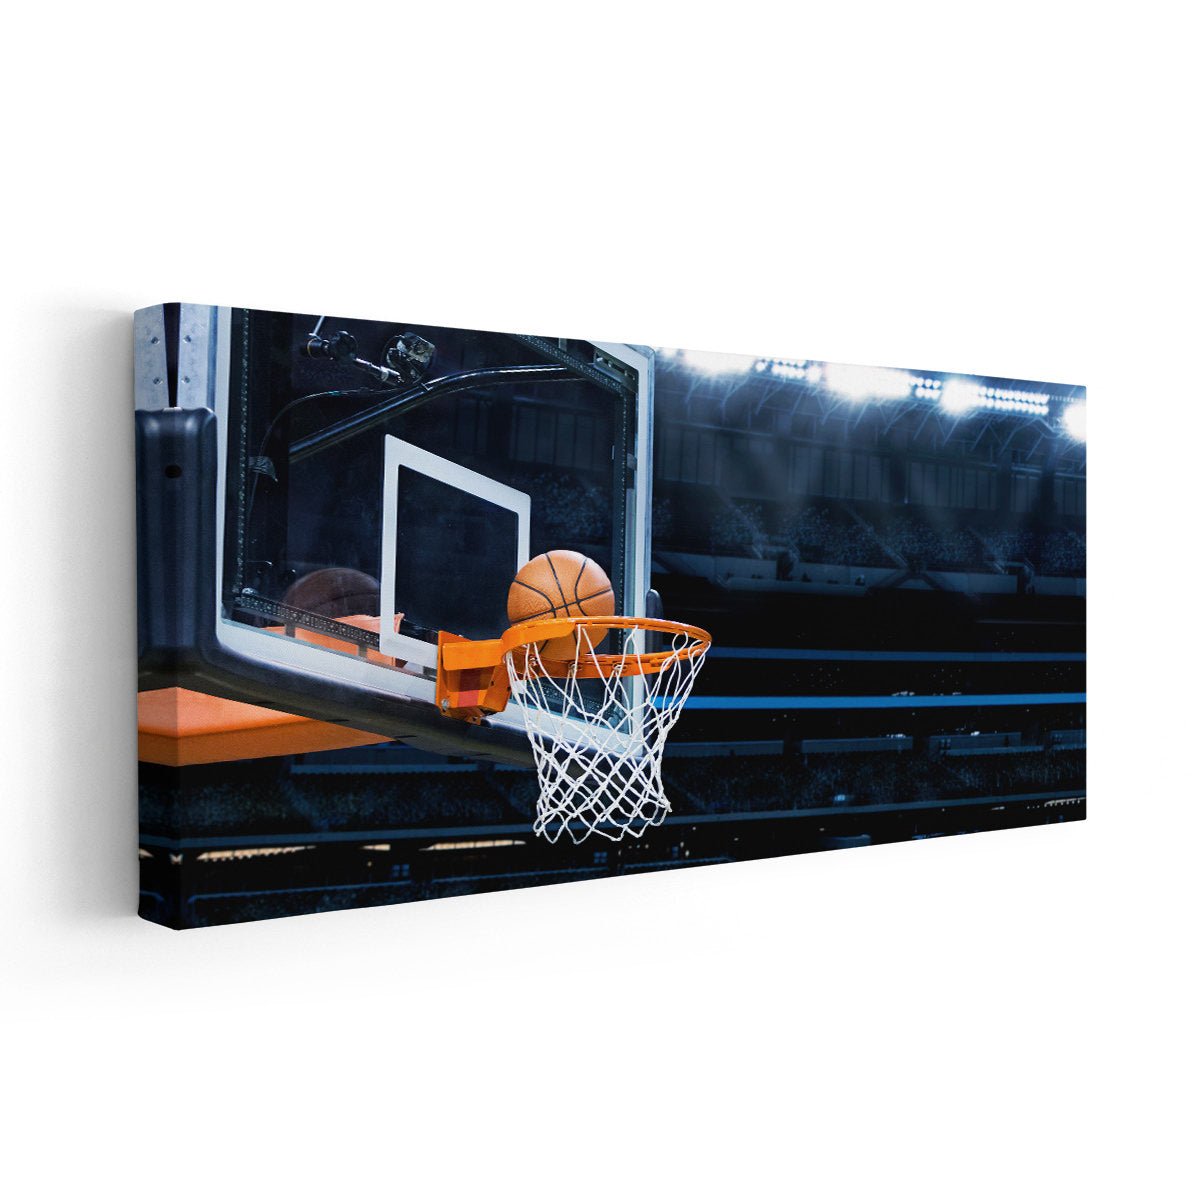 Professional Basketball Arena Canvas Wall Art